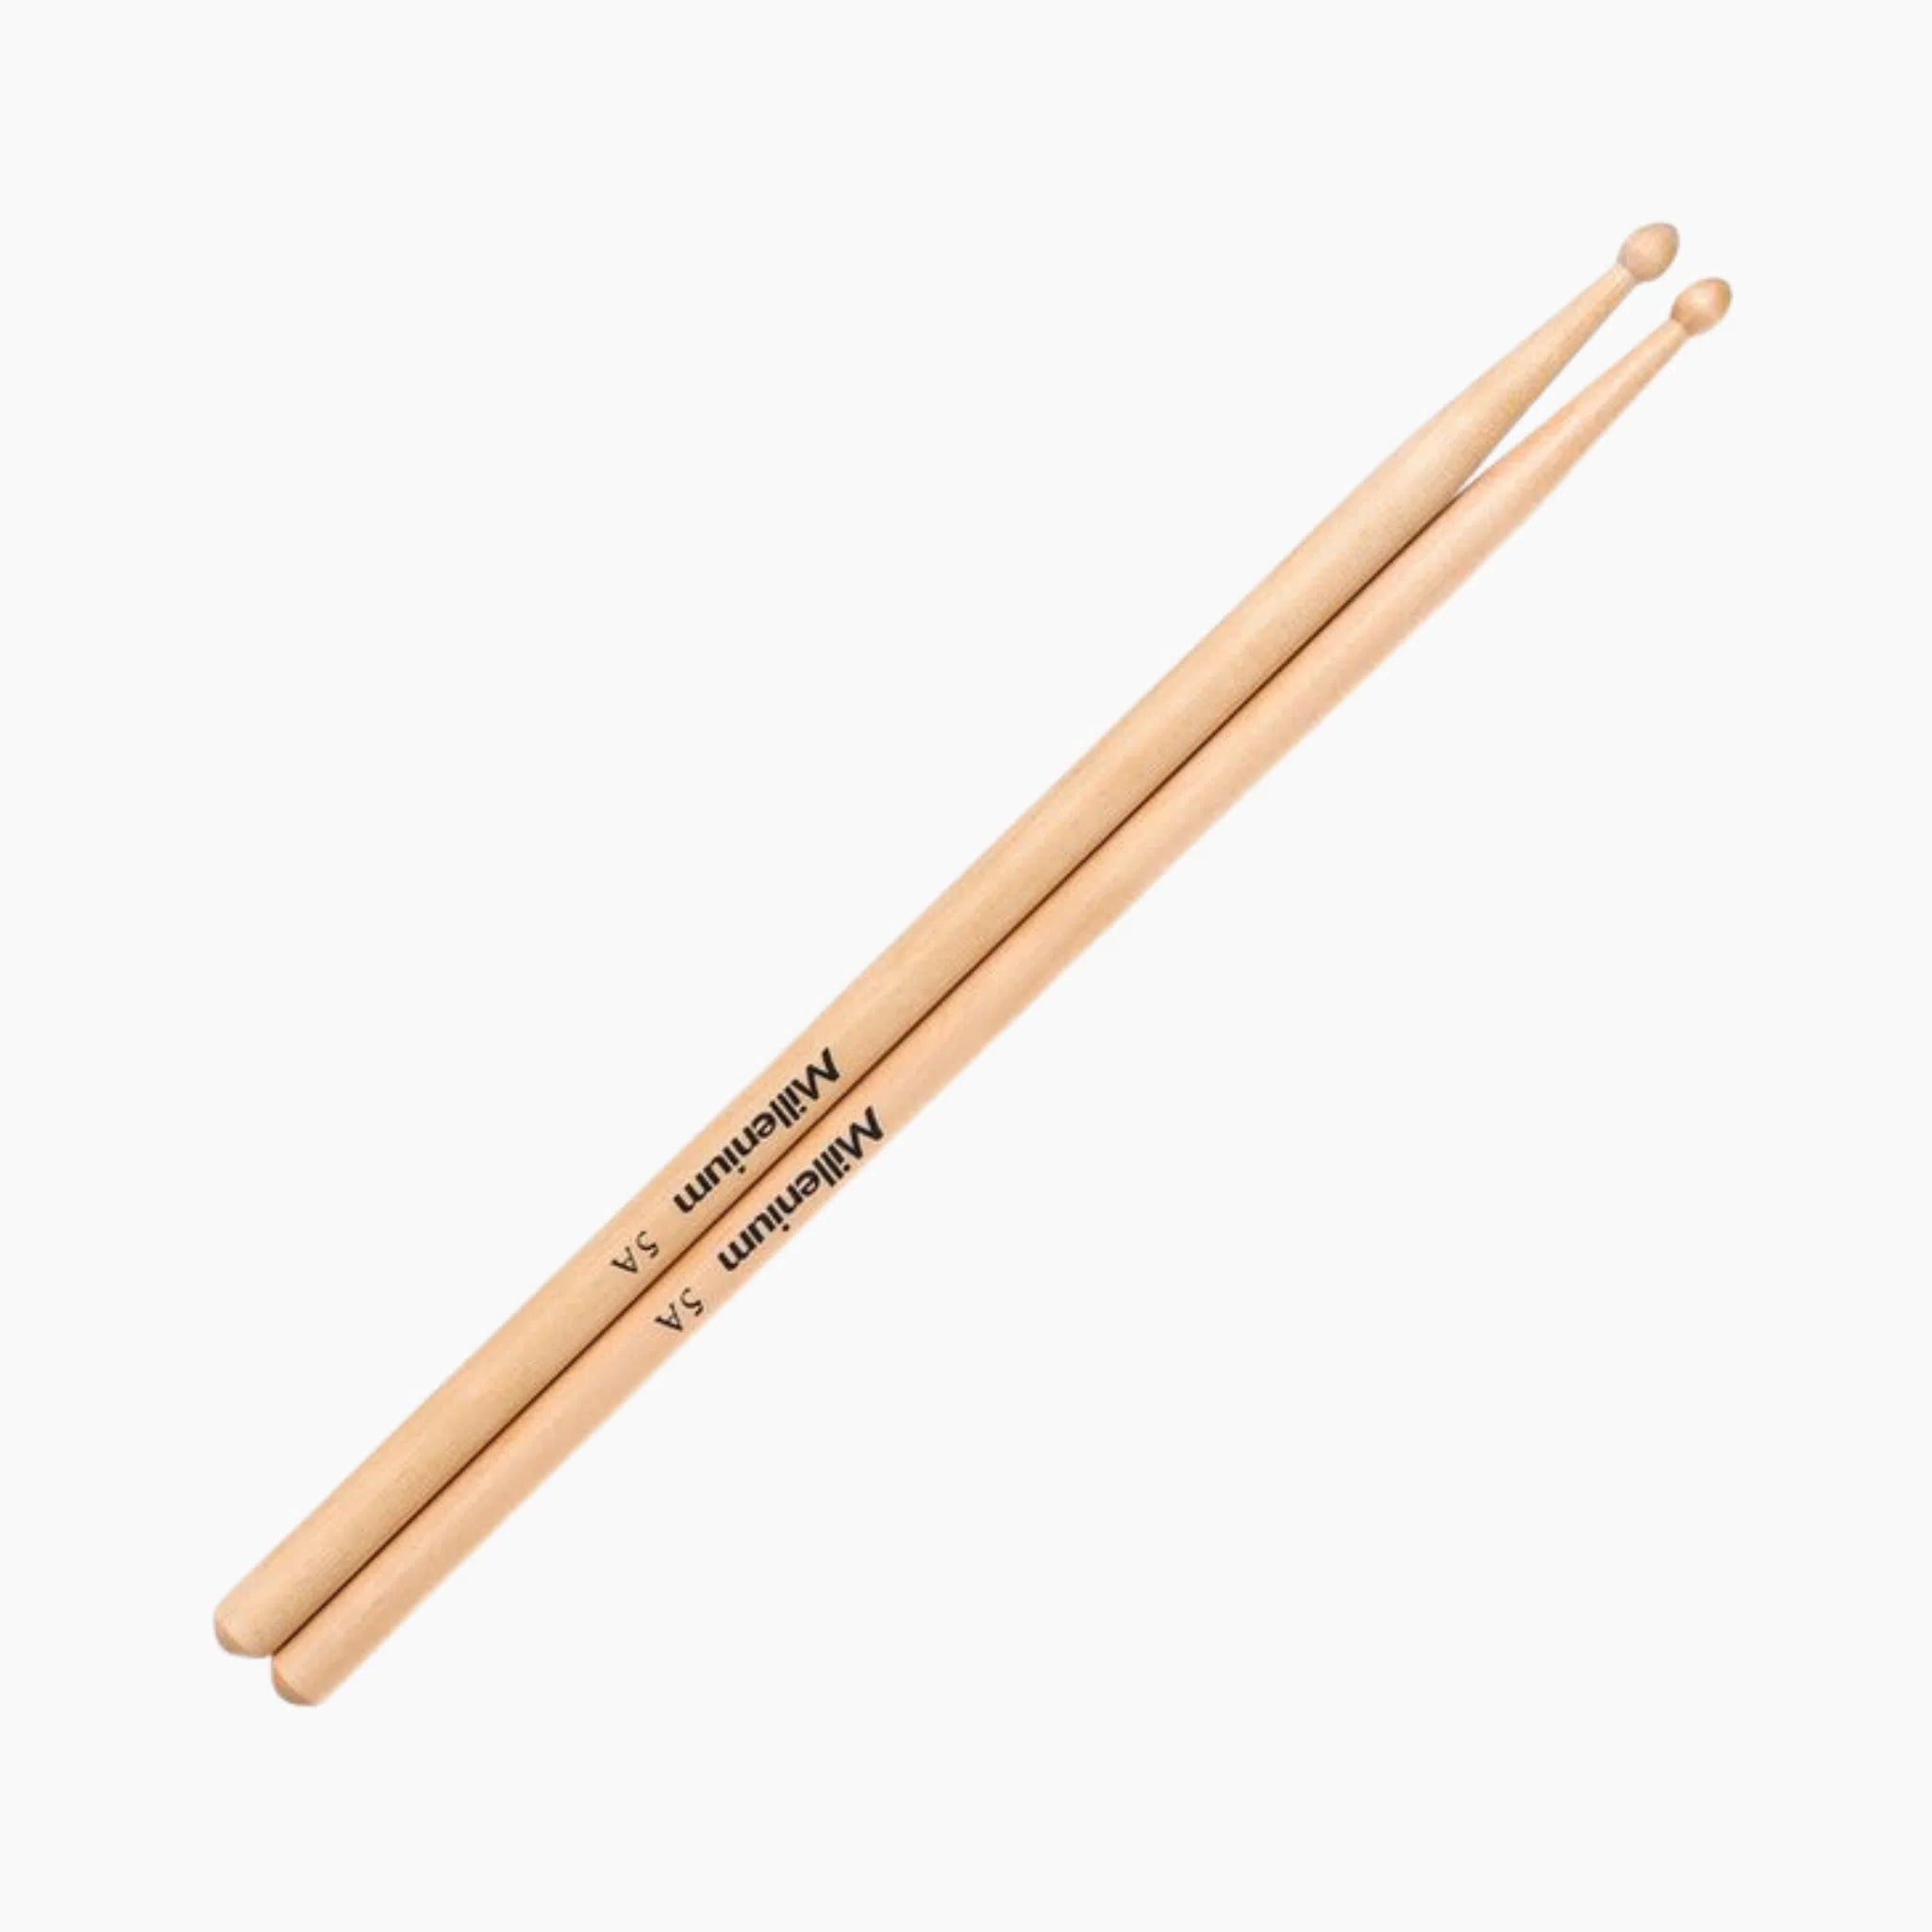 Millenium 5A Maple Drumsticks Wood